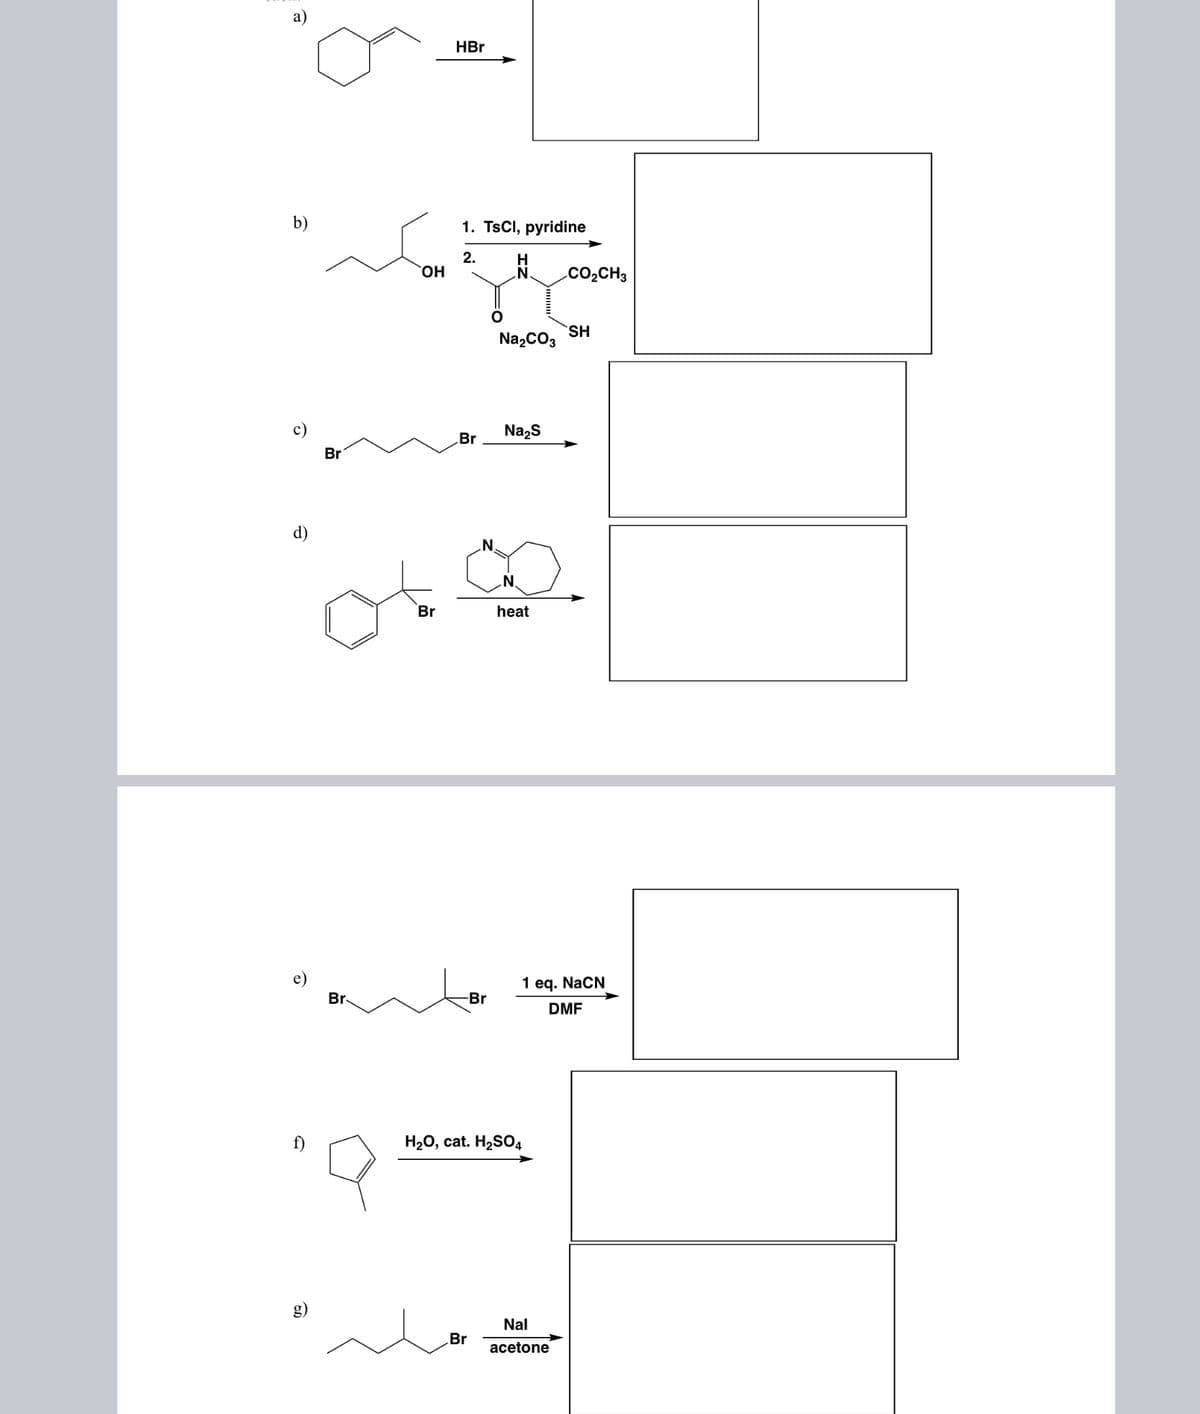 а)
HBr
b)
1. TsCl, pyridine
2.
H
HO.
CO2CH3
SH
Na,CO3
c)
Nazs
Br
Br
d)
.N.
Br
heat
1 eq. NaCN
Br-
-Br
DMF
H20, cat. H2SO4
g)
Nal
Br
acetone
